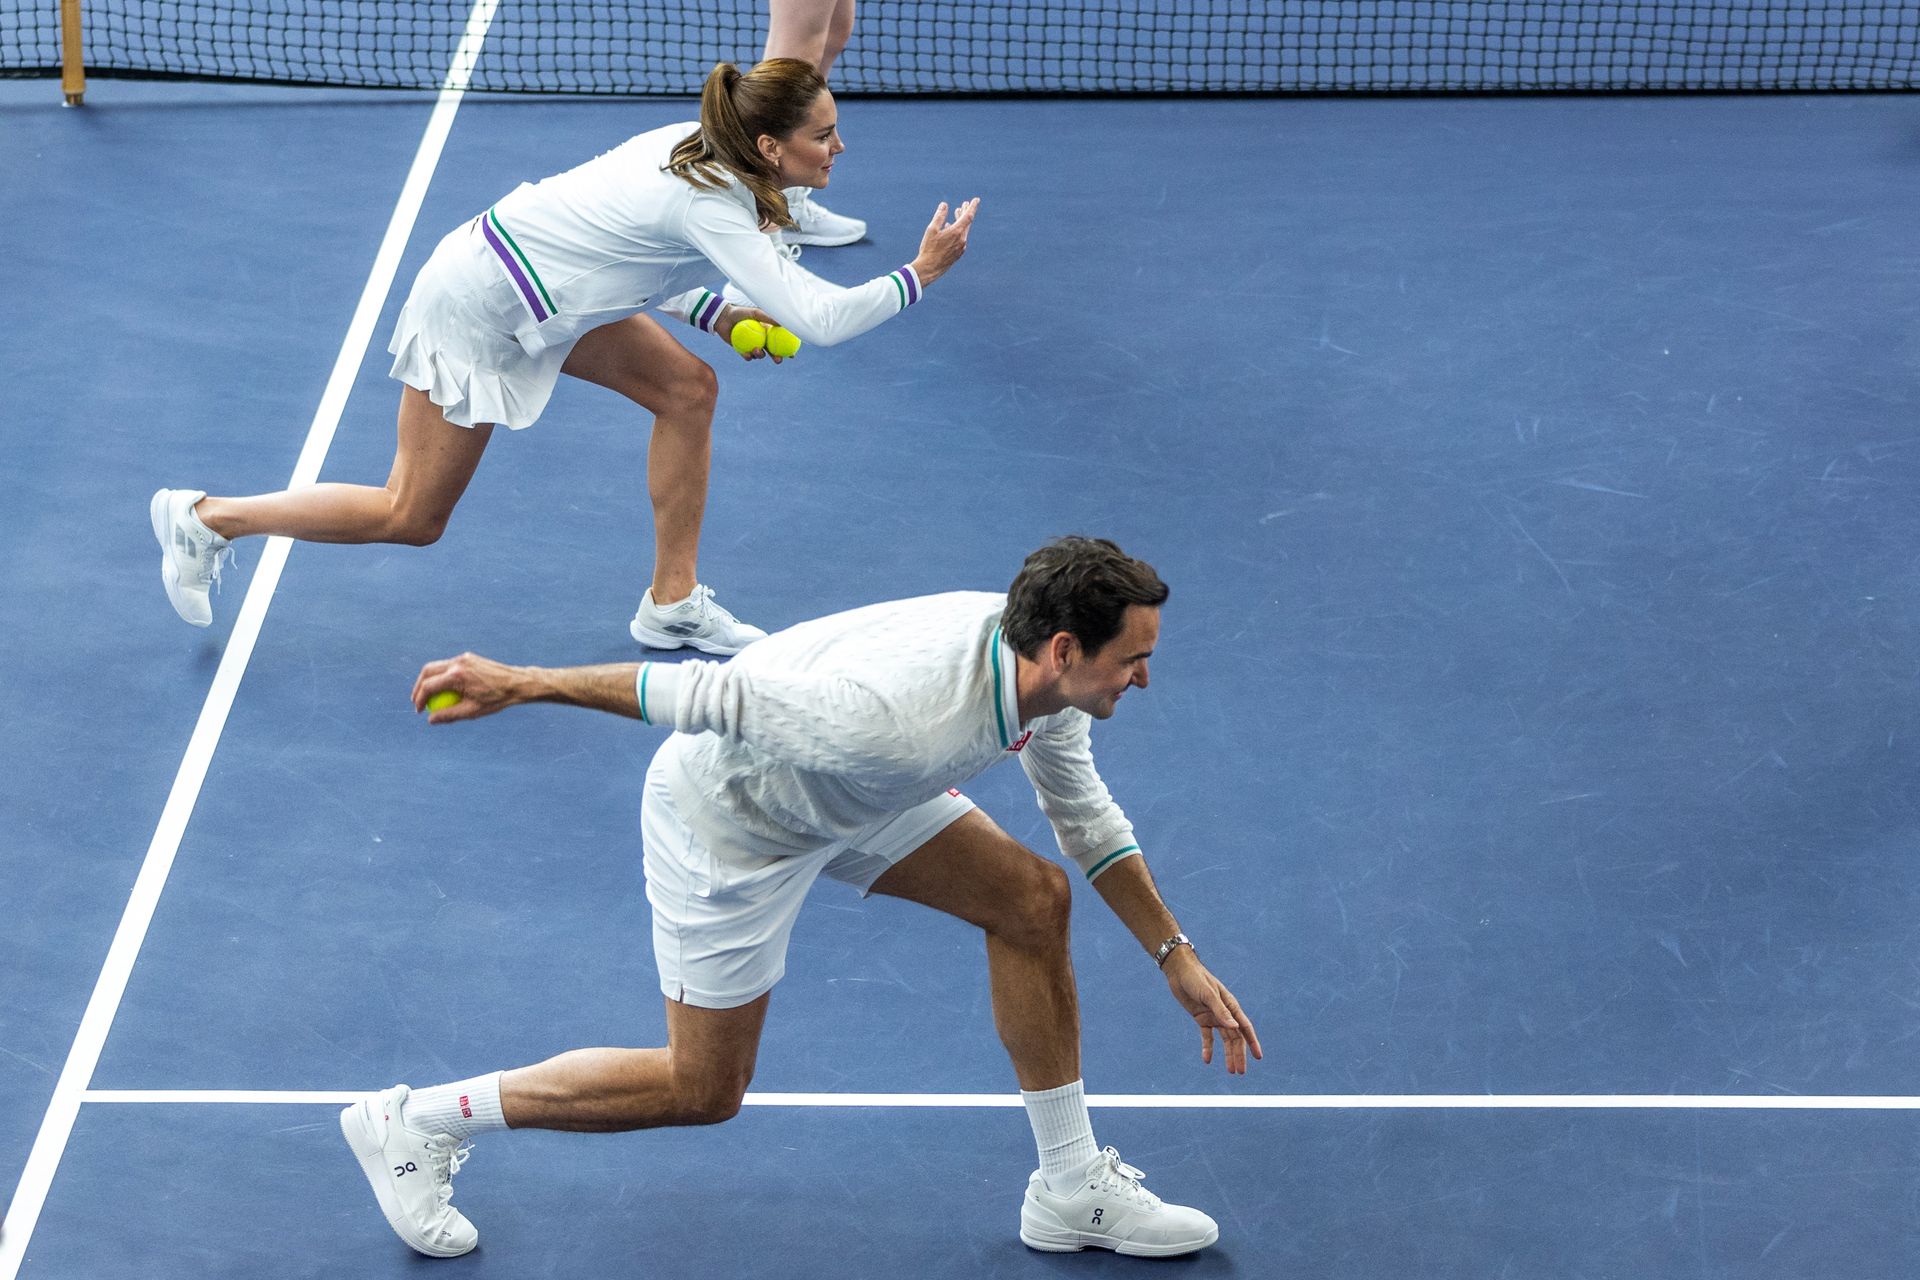 Catherine en Roger Federer